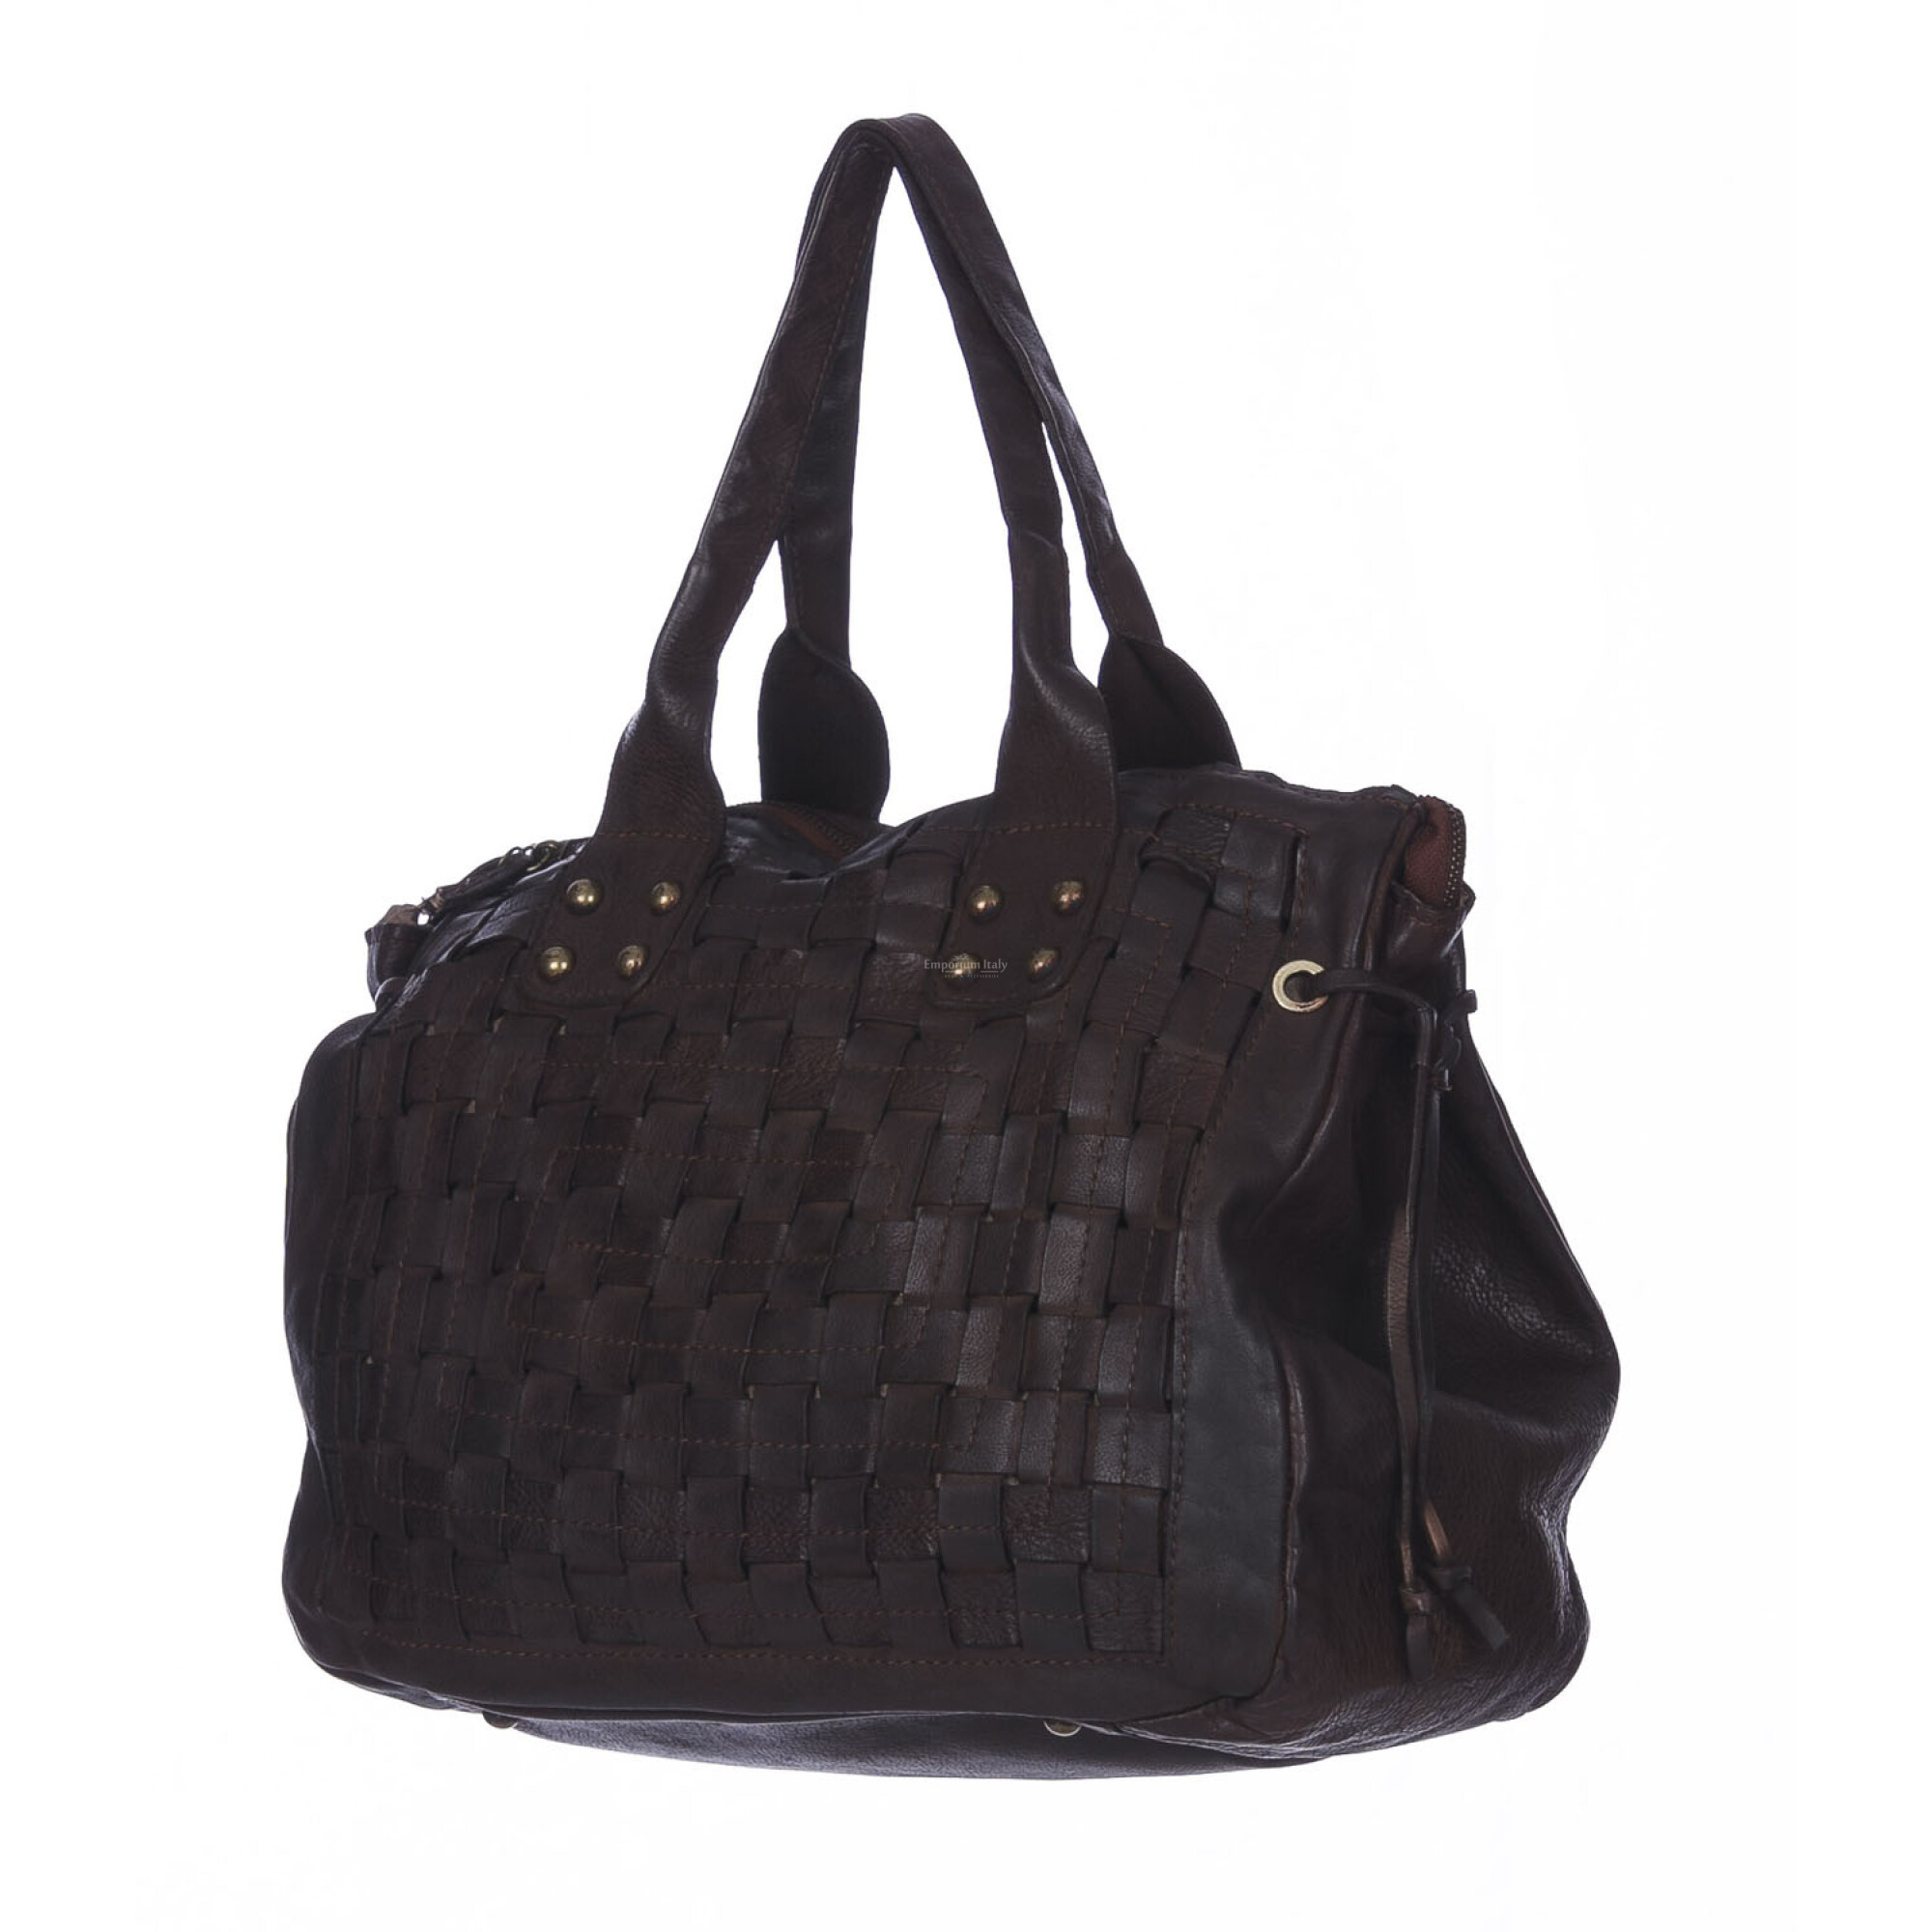 Vintage look shoulderbag in soft leather / 15322 - Black (Nero